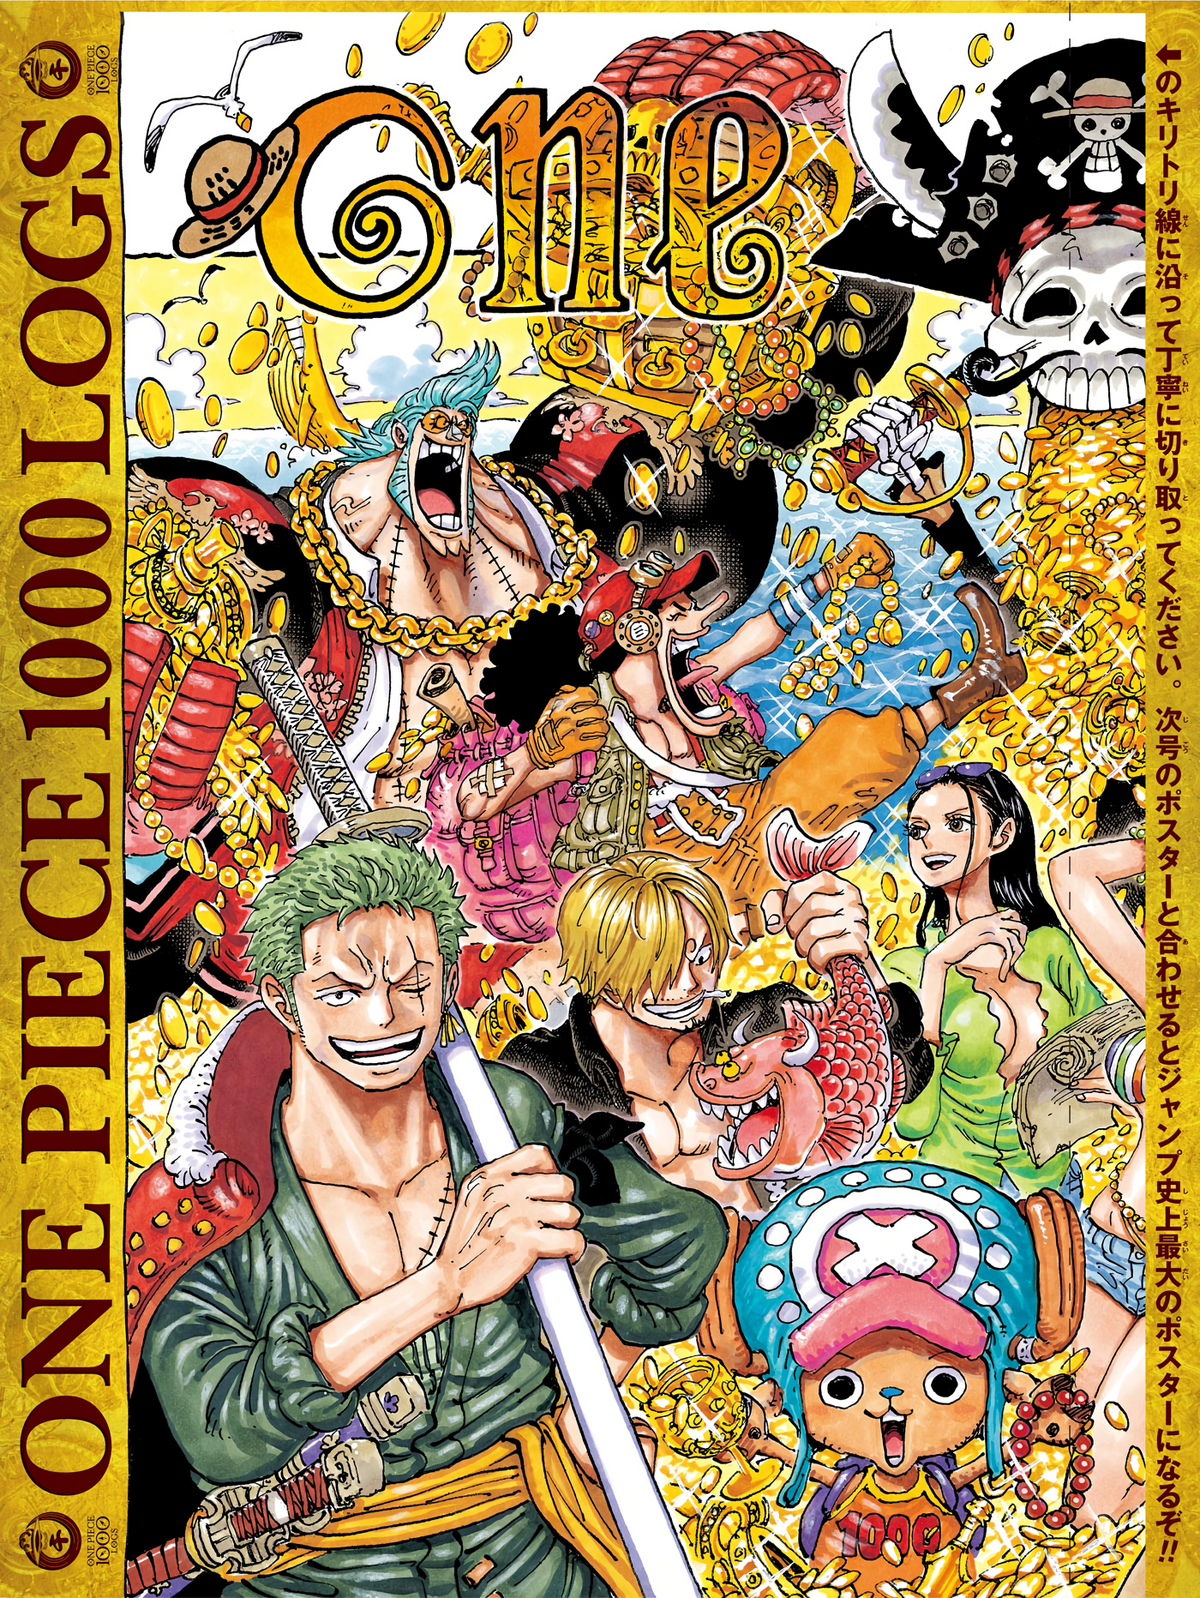 One Piece: WANO KUNI (892-Current) I Trust Momo - Luffy's Final